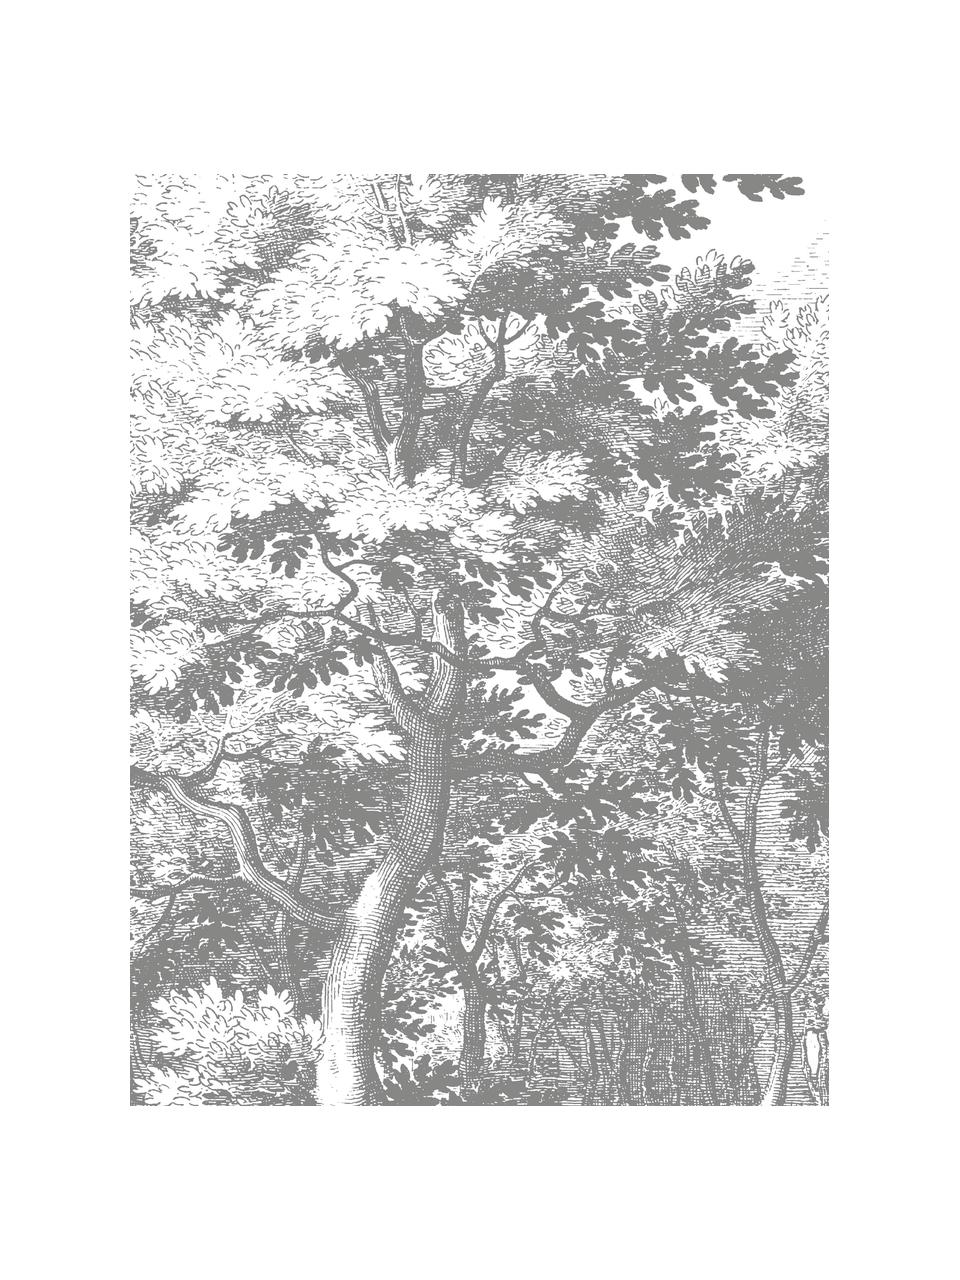 Fototapeta Landscapes, Włóknina, Biały, szary, S 190 x W 220 cm